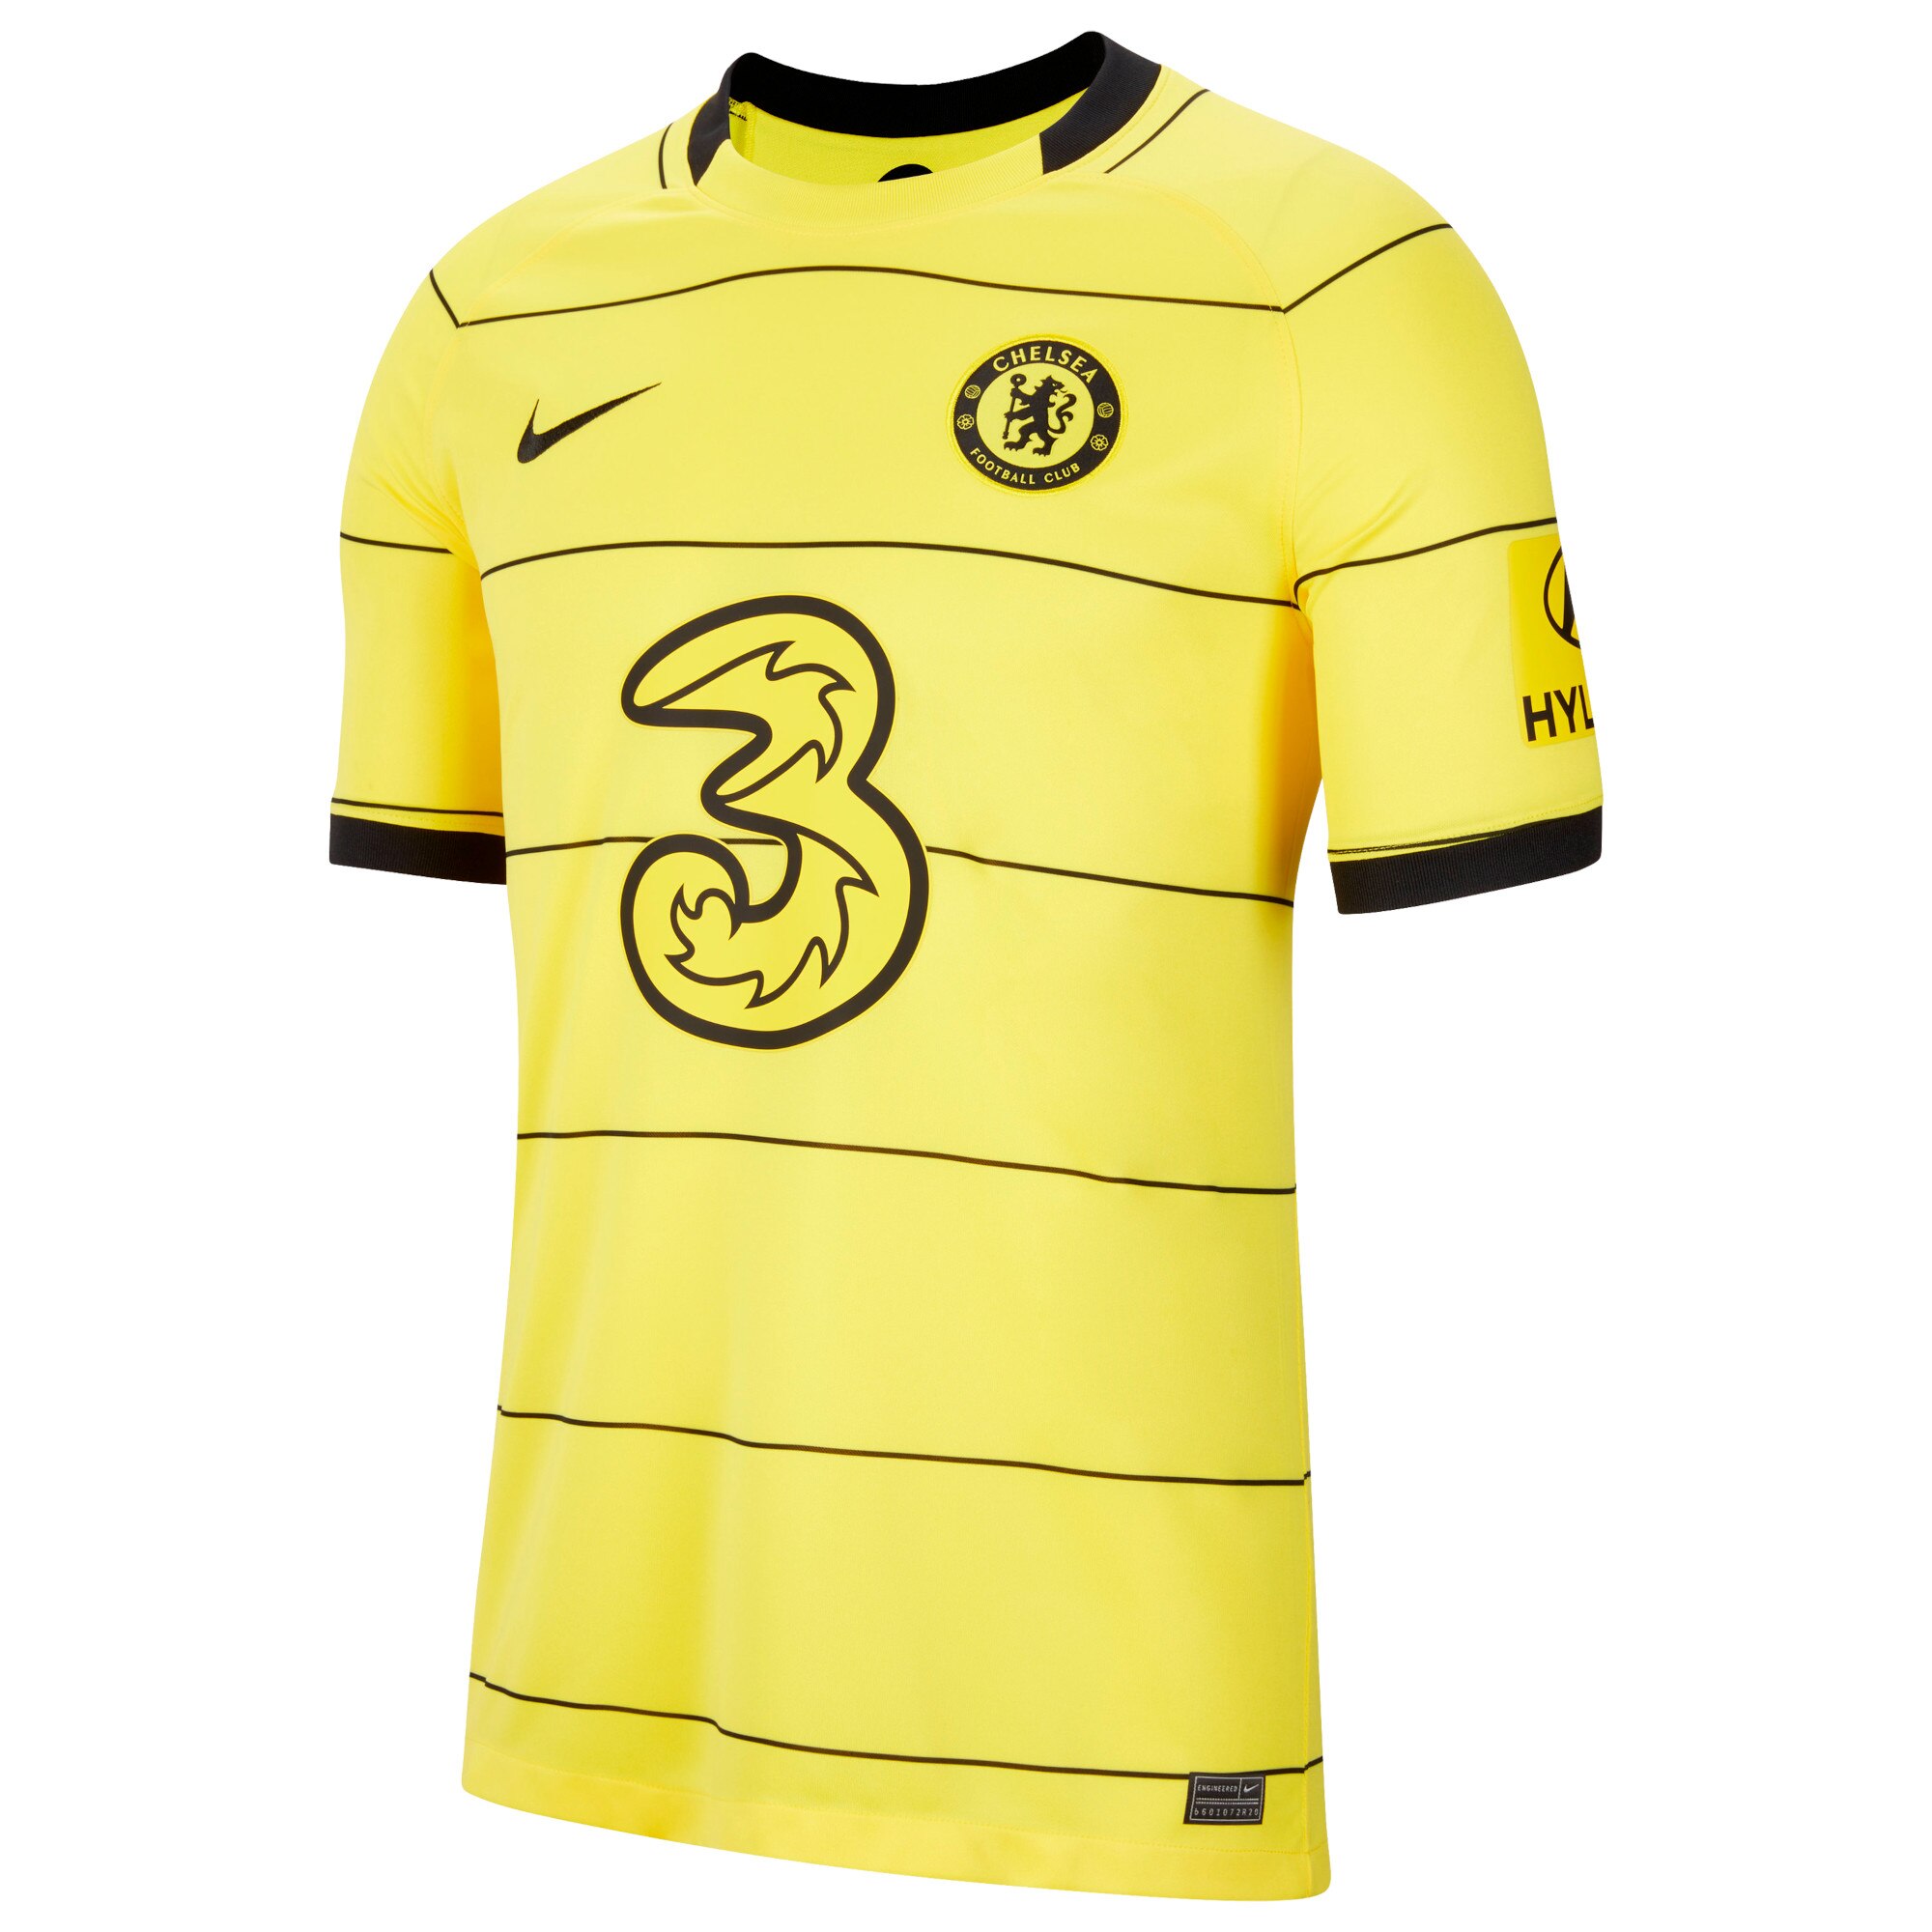 Chelsea Away Stadium Shirt 2021-22 with Hudson-Odoi 20 printing